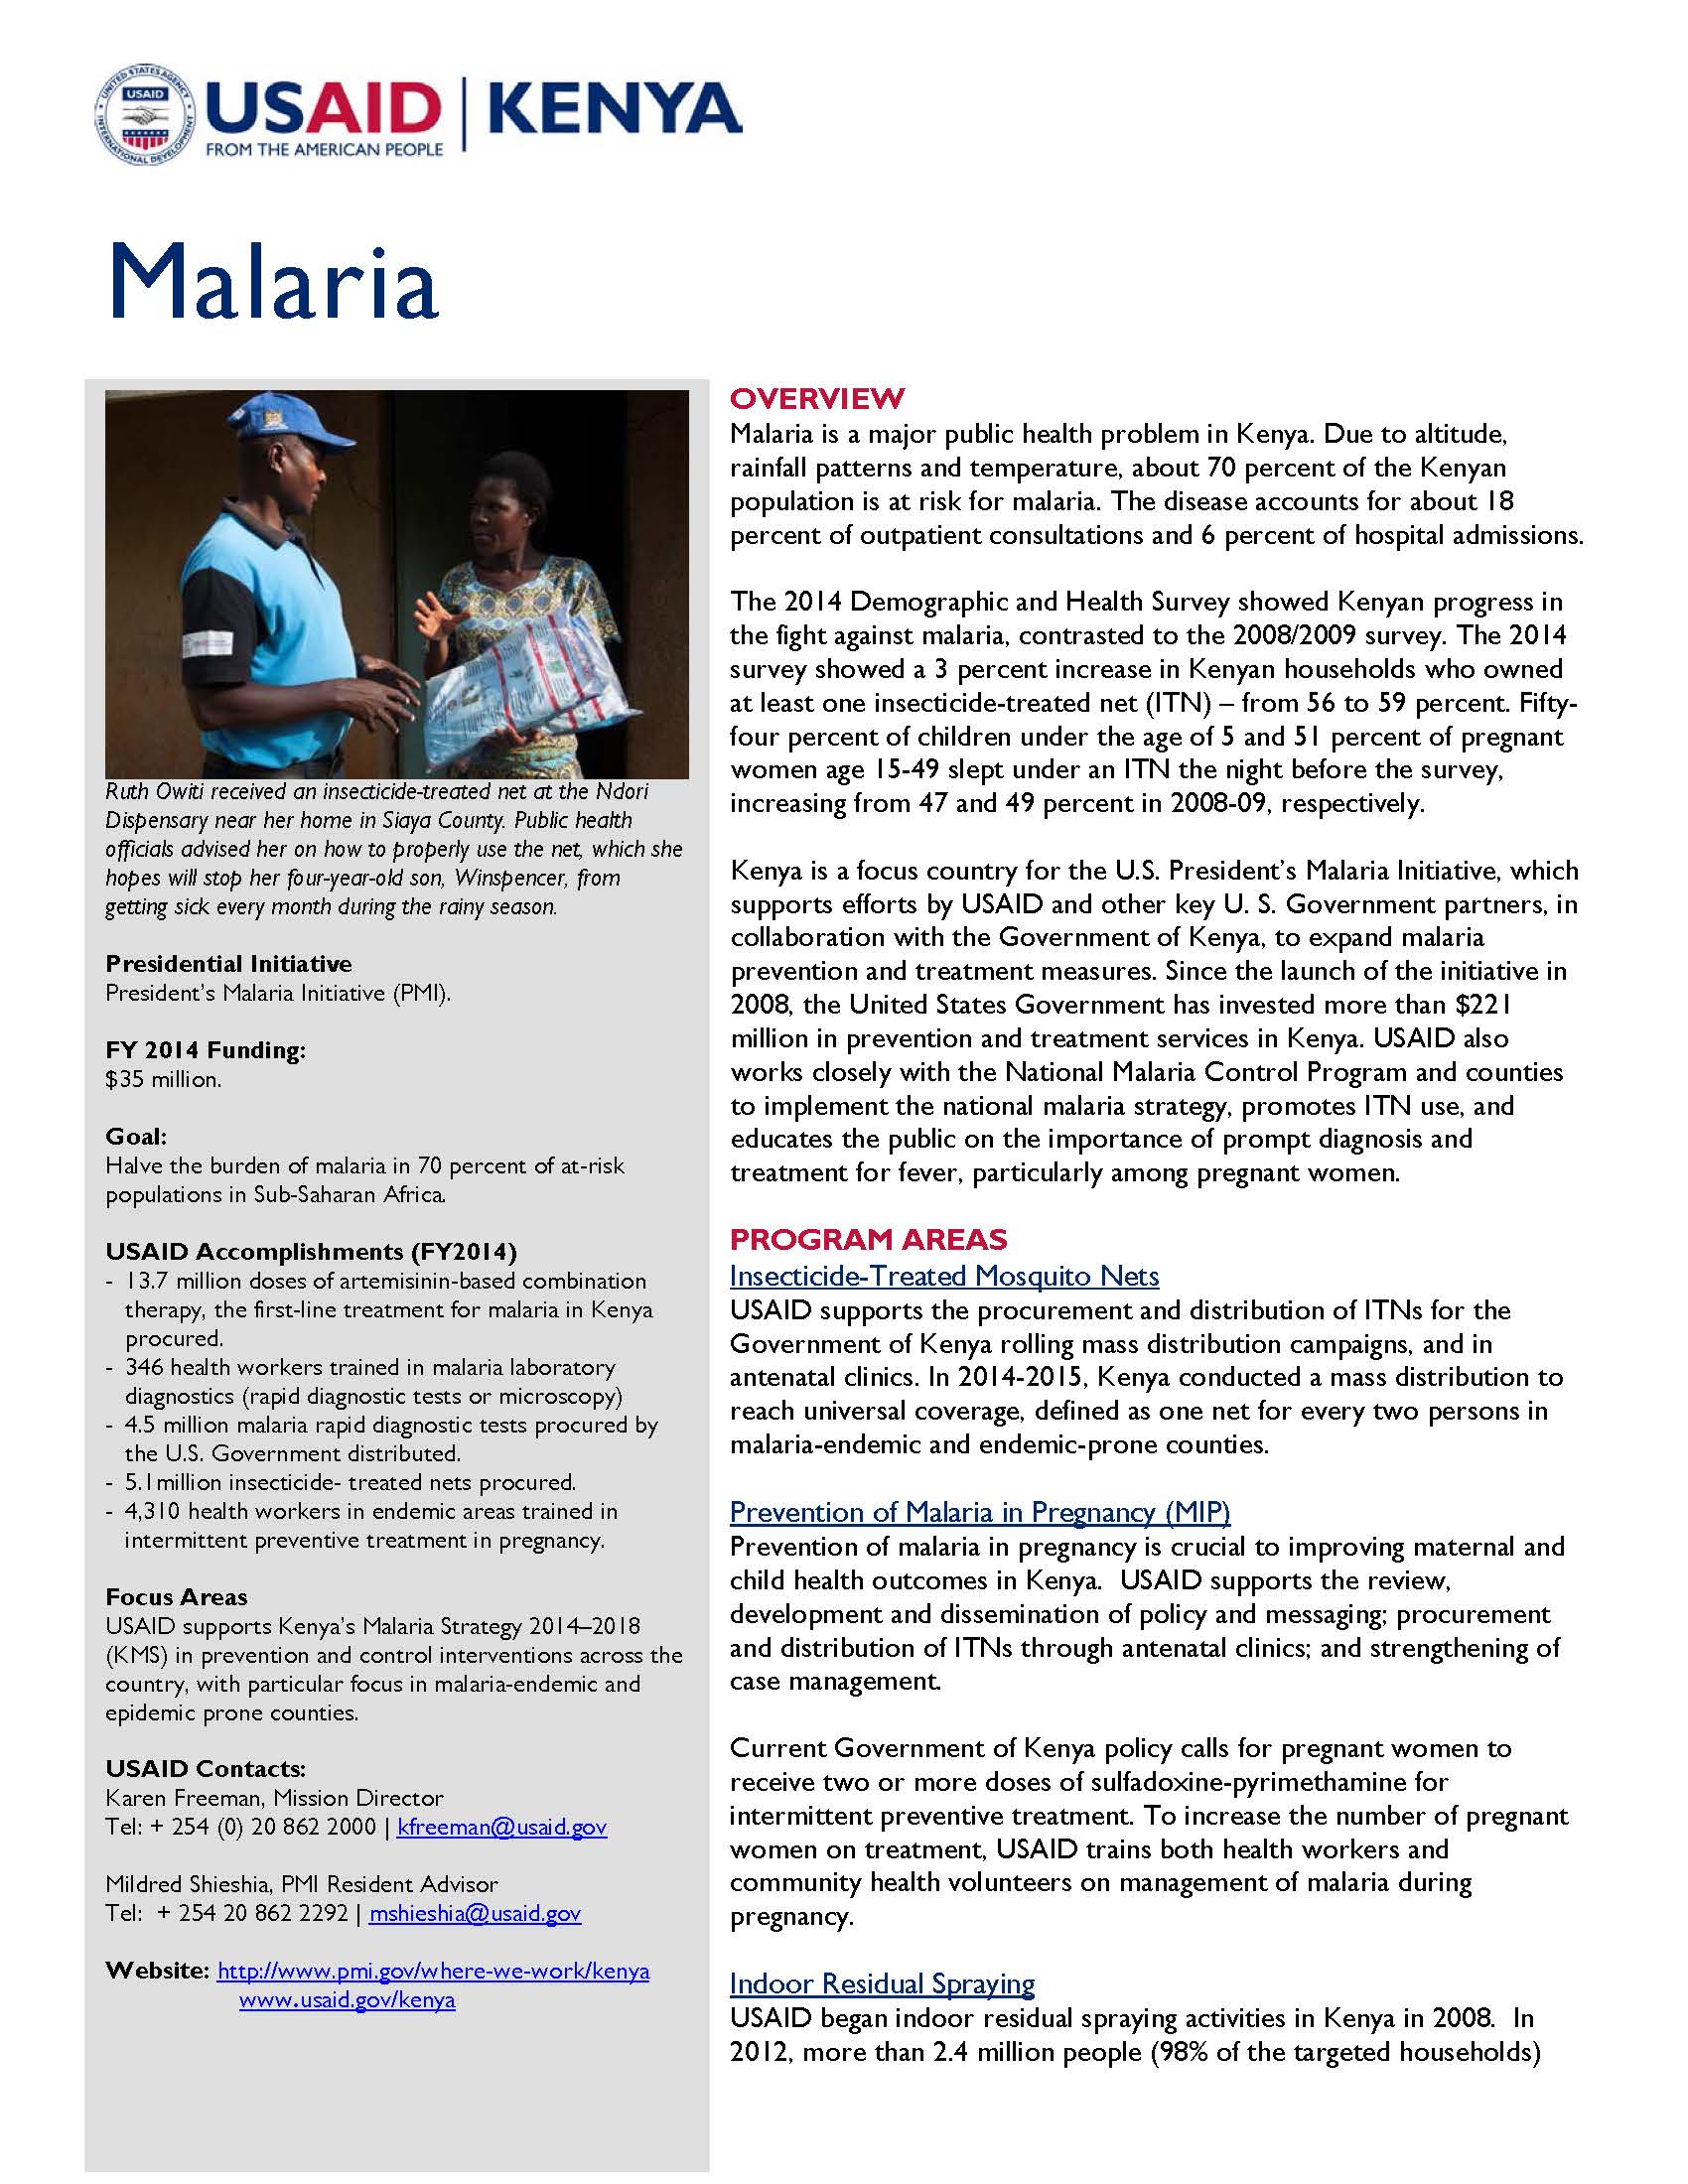 Malaria Fact Sheet